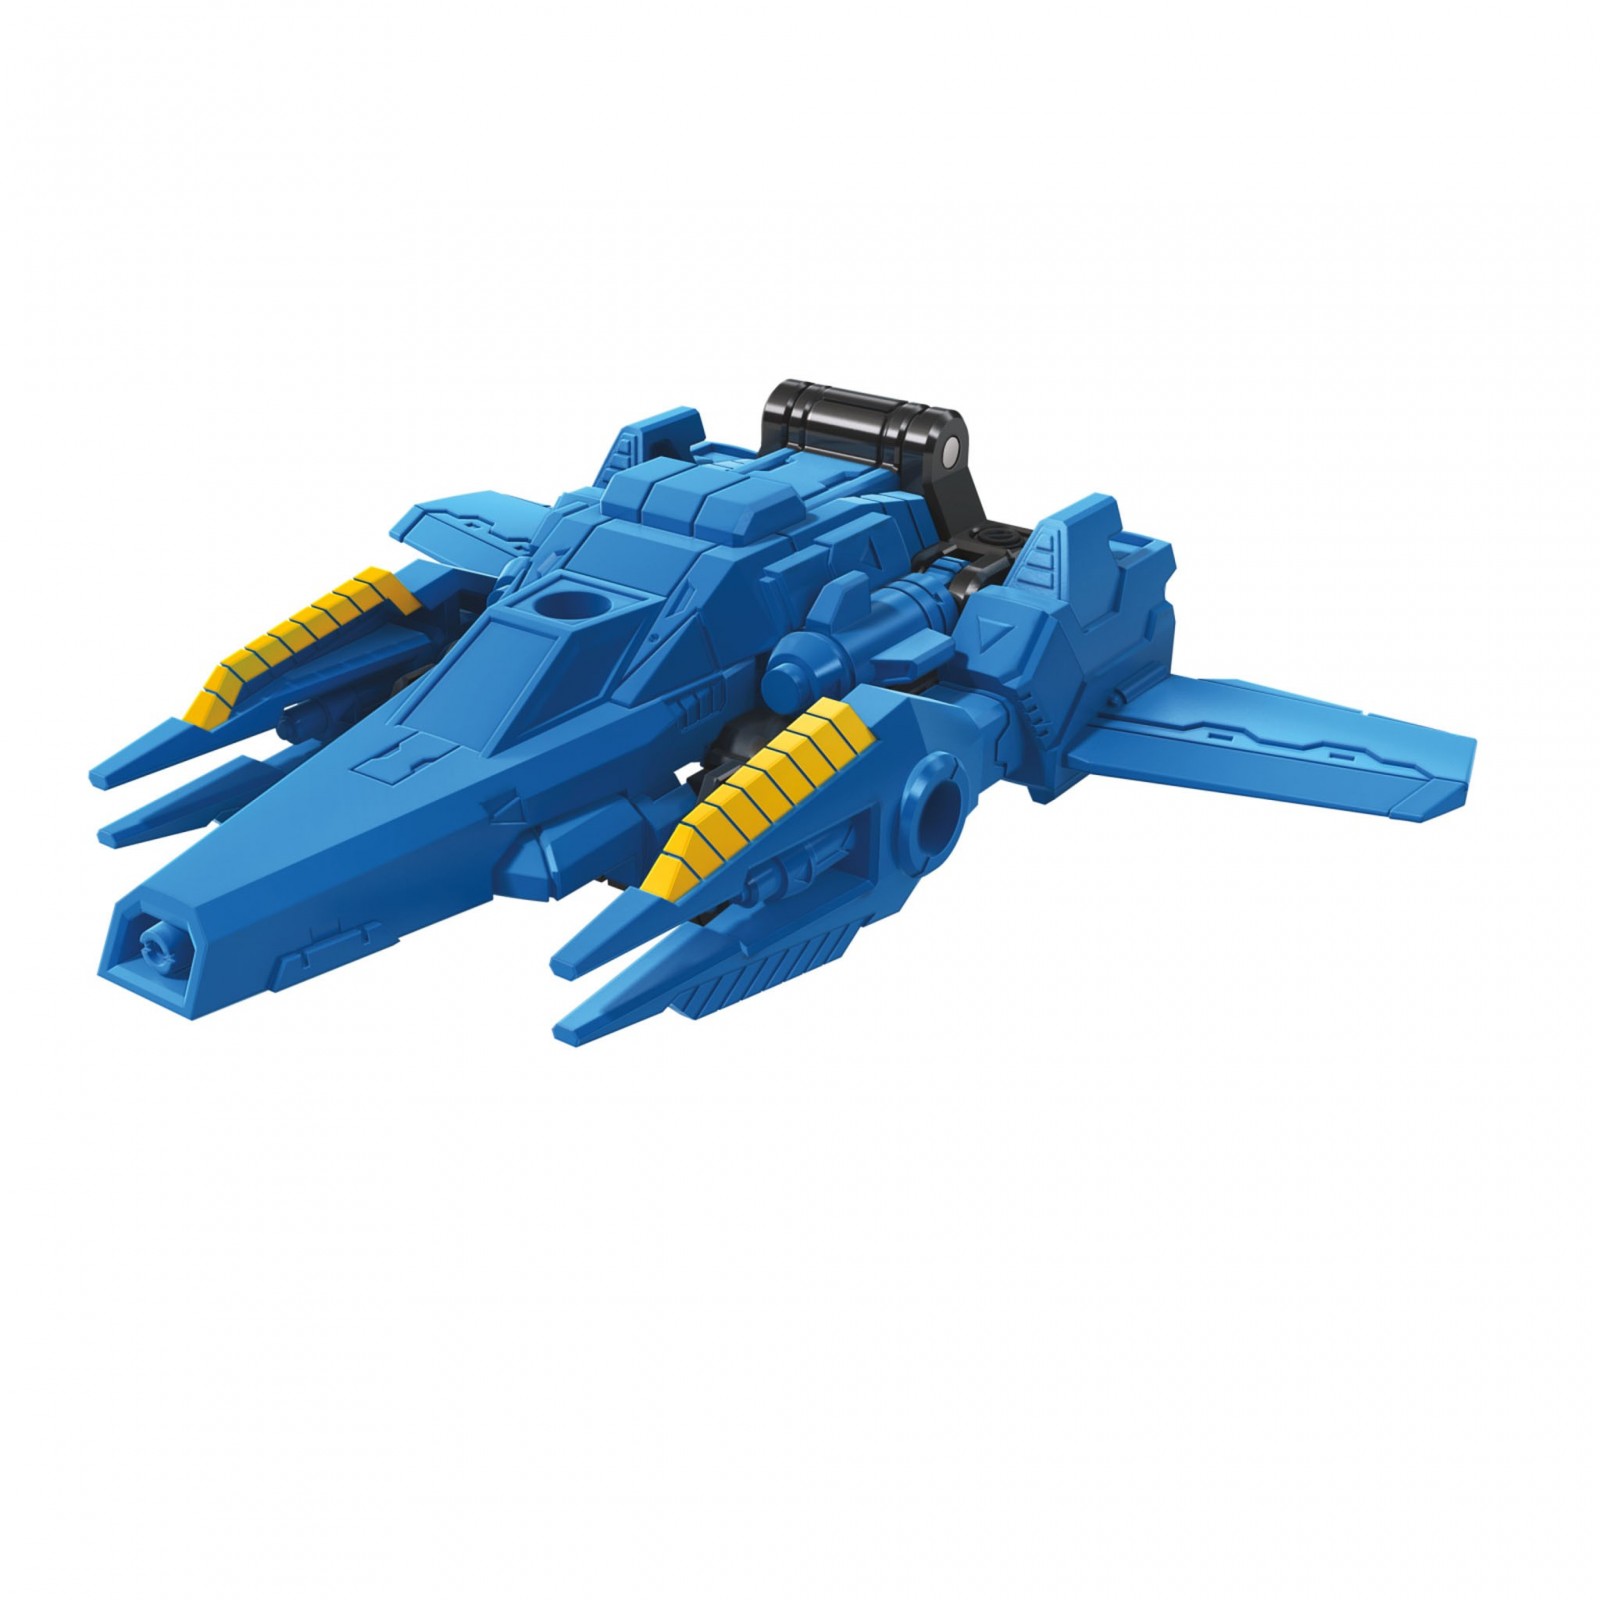 Transformers News: Transformers Cyberverse Spark Armor Toys Revealed